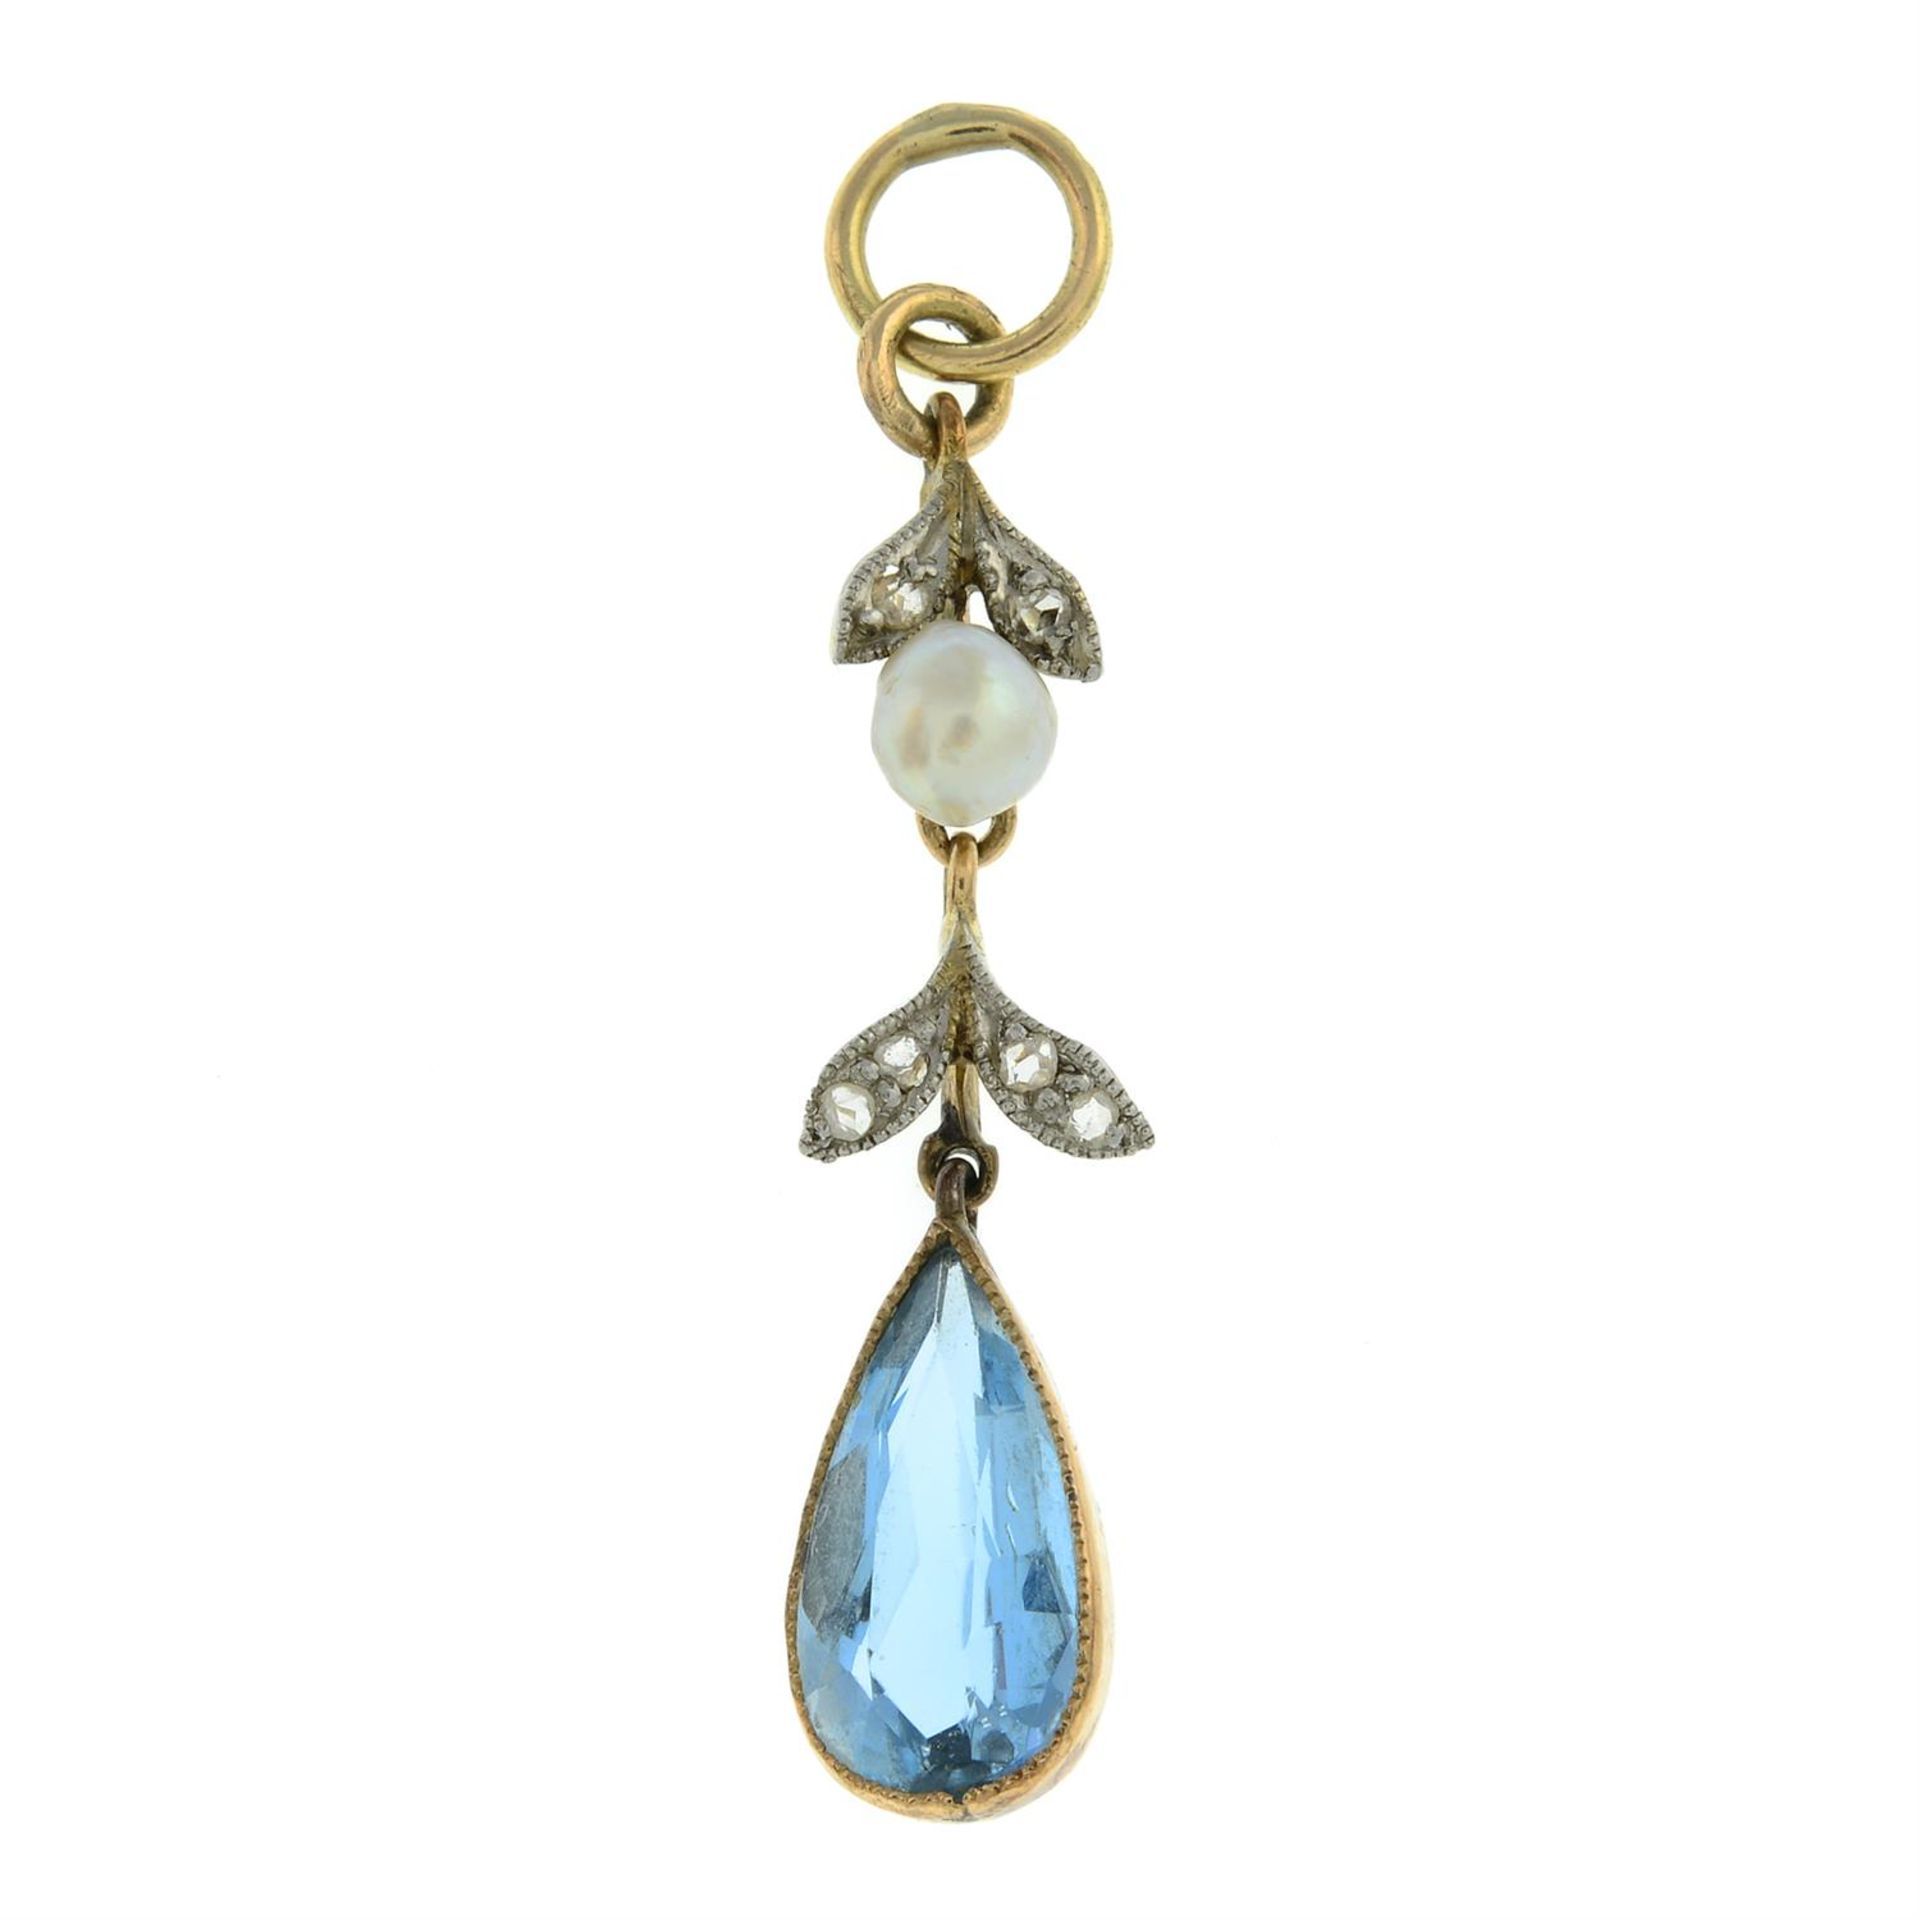 Early 20th century aquamarine, split pearl, rose-cut diamond pendant